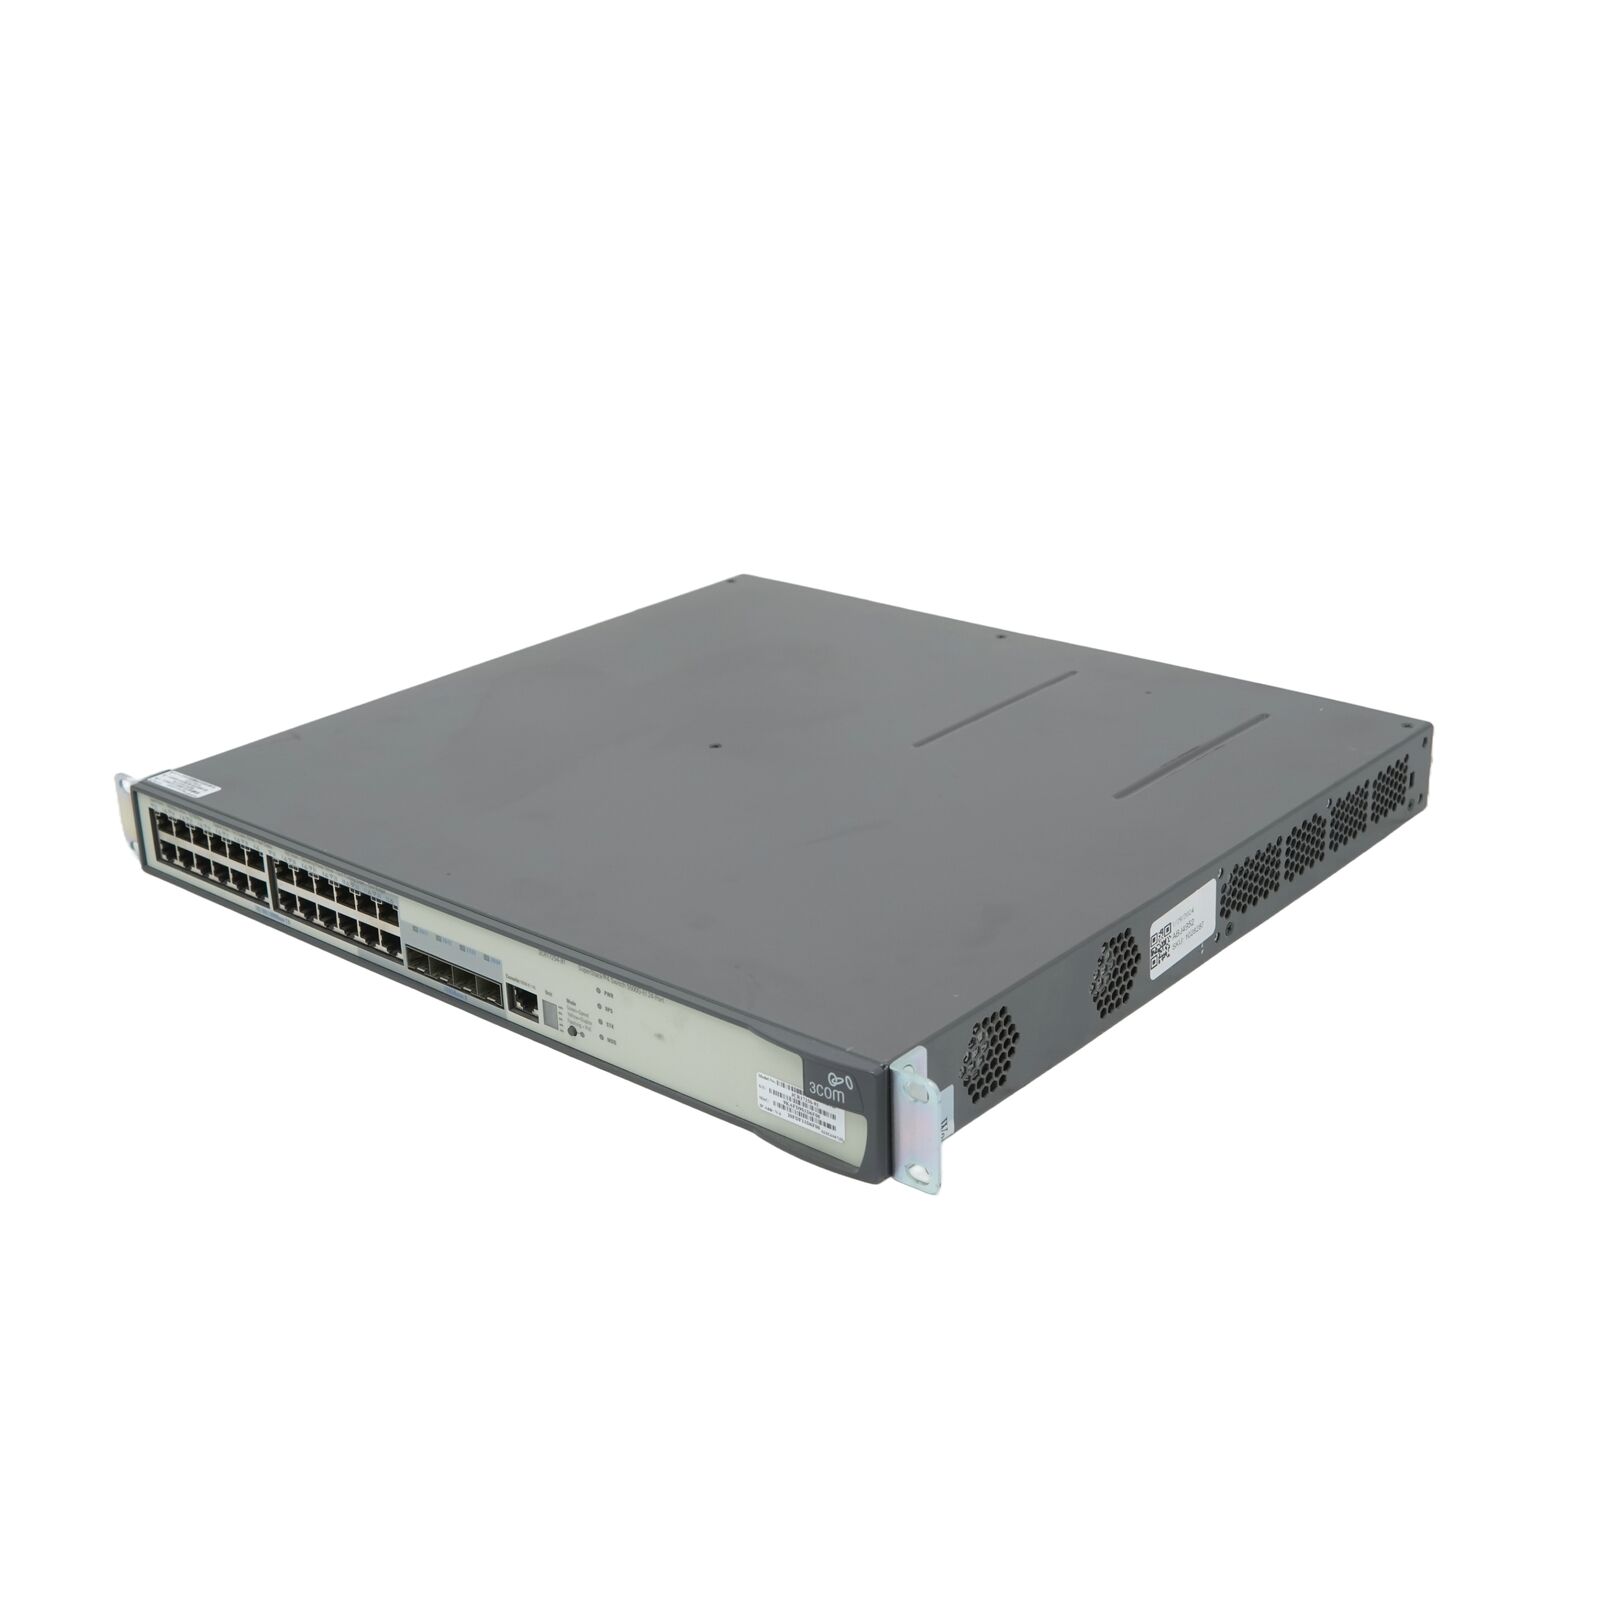 3Com 5500G-EI 24-Port Gigabit Switch